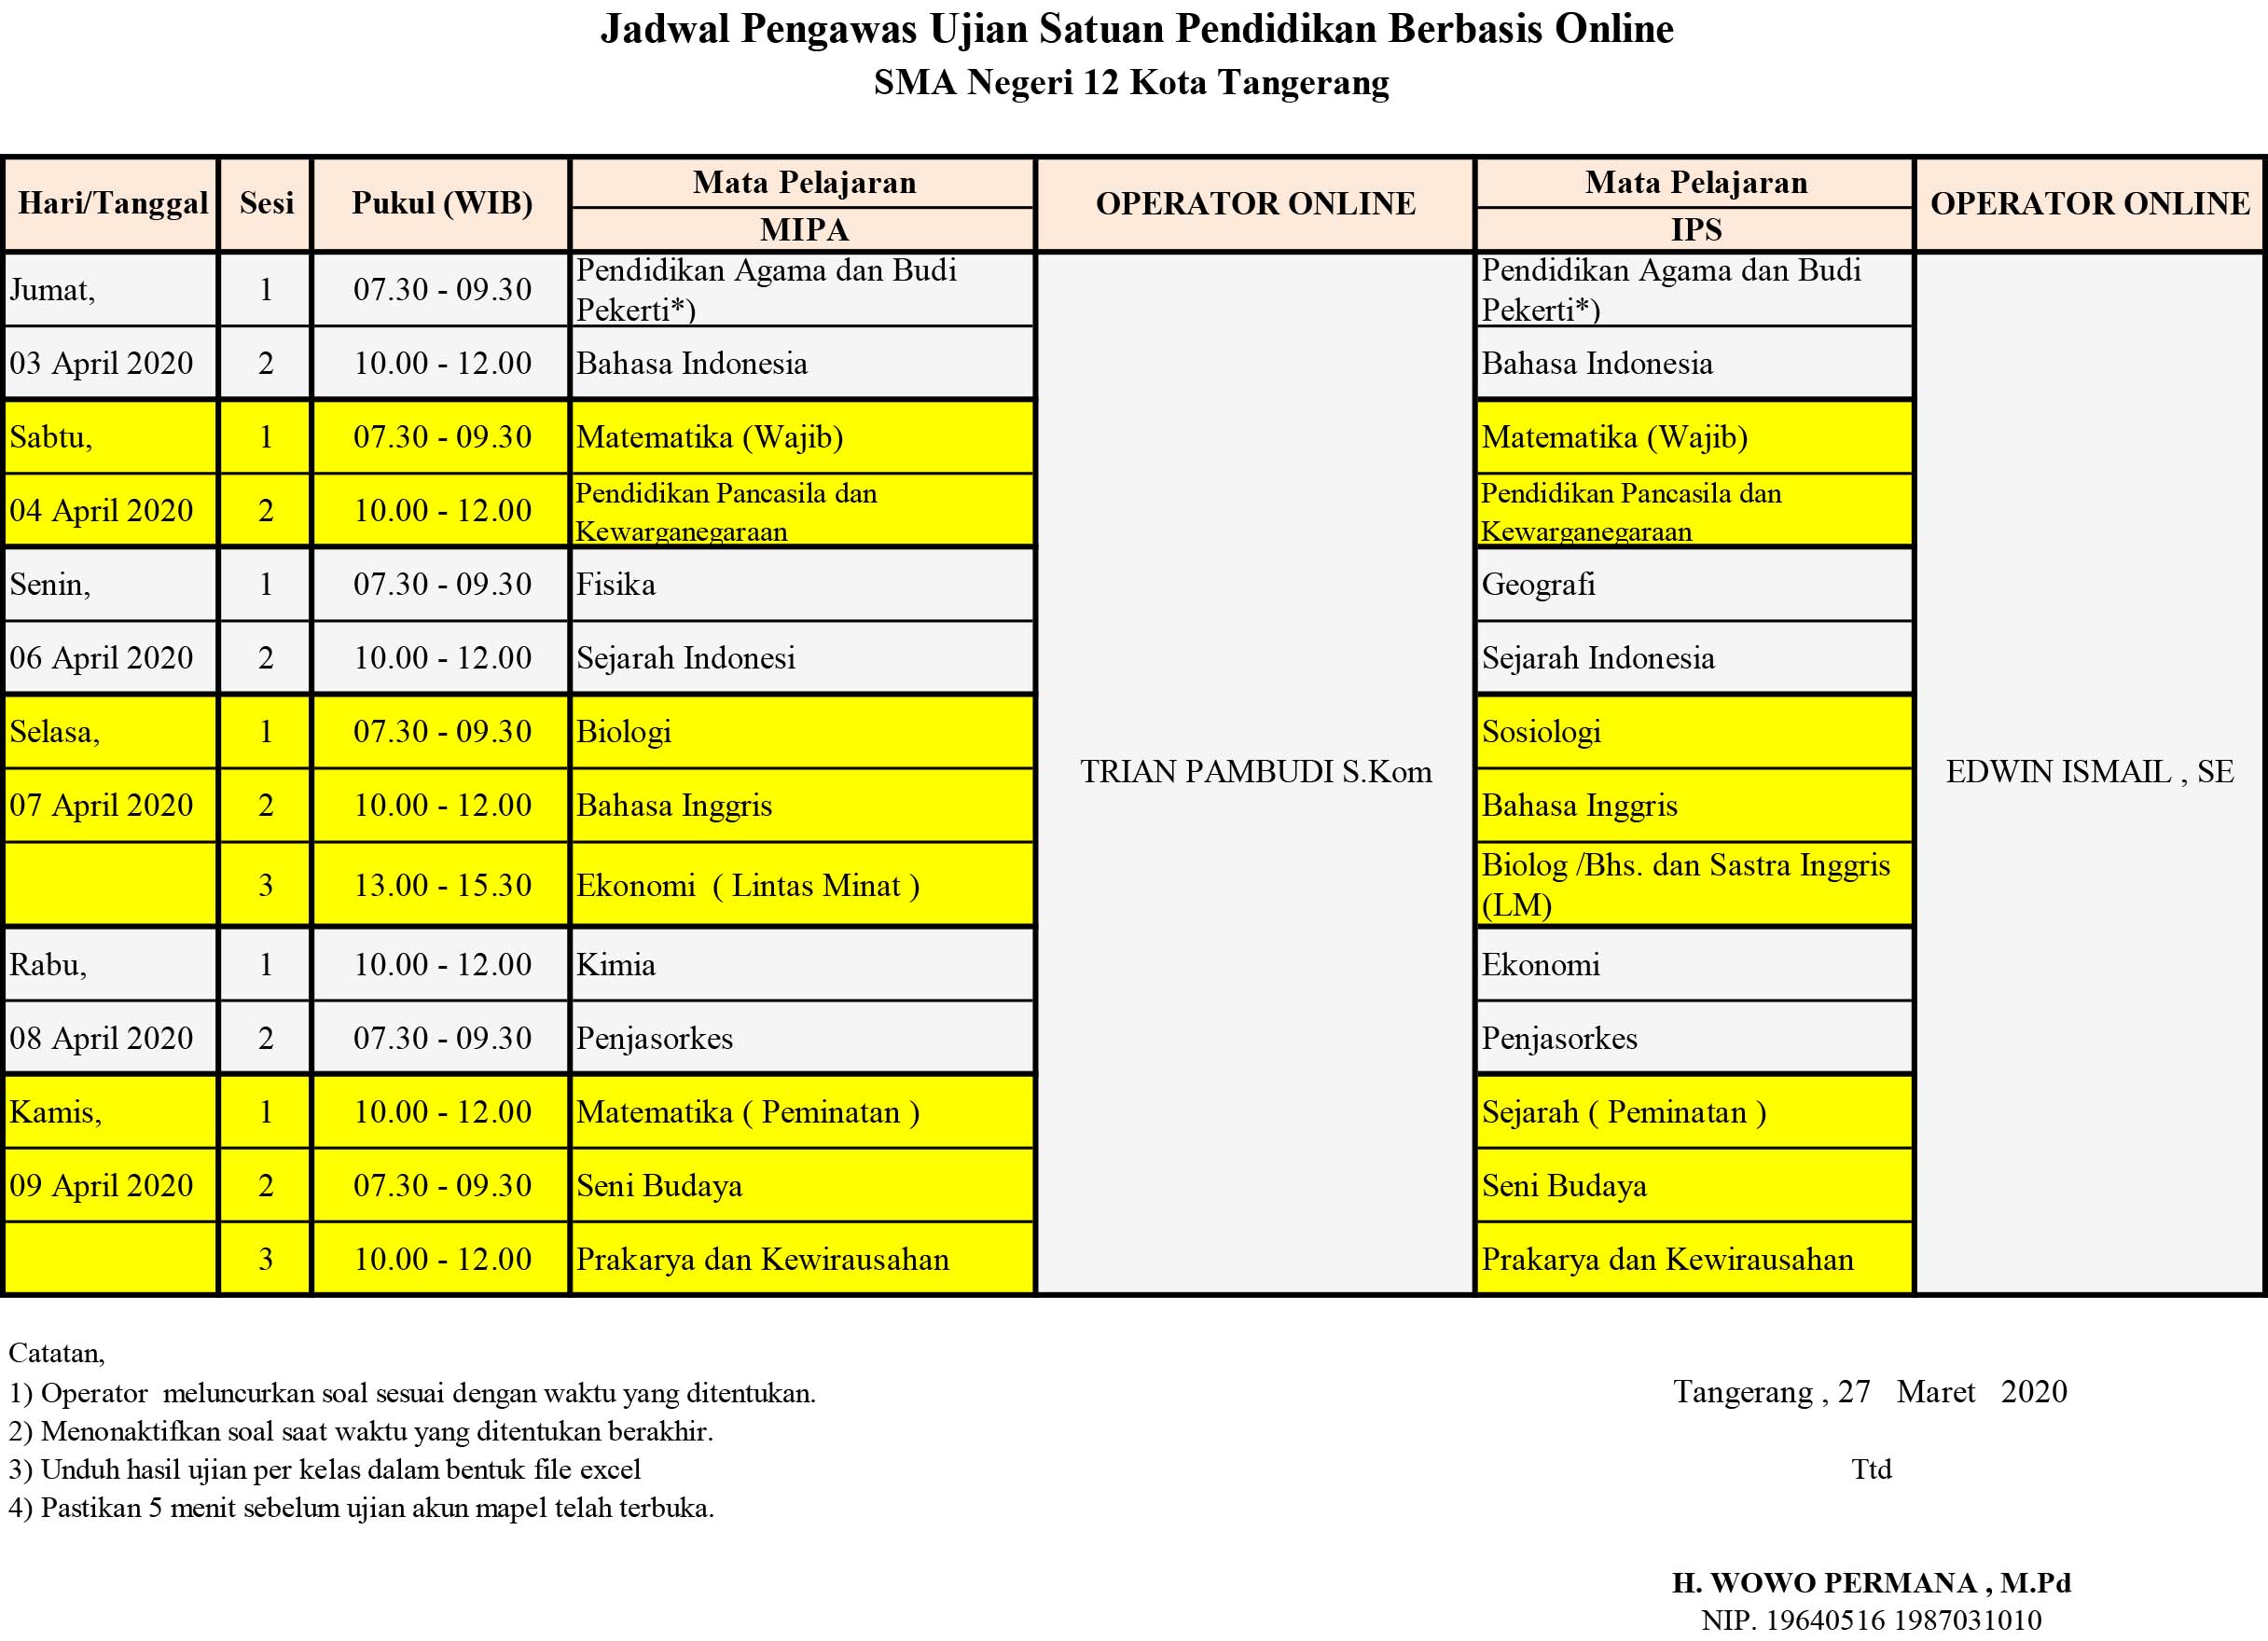 Jadwal Ujian Satuan Pendidikan (USP) | SMAN 12 Kota Tangerang